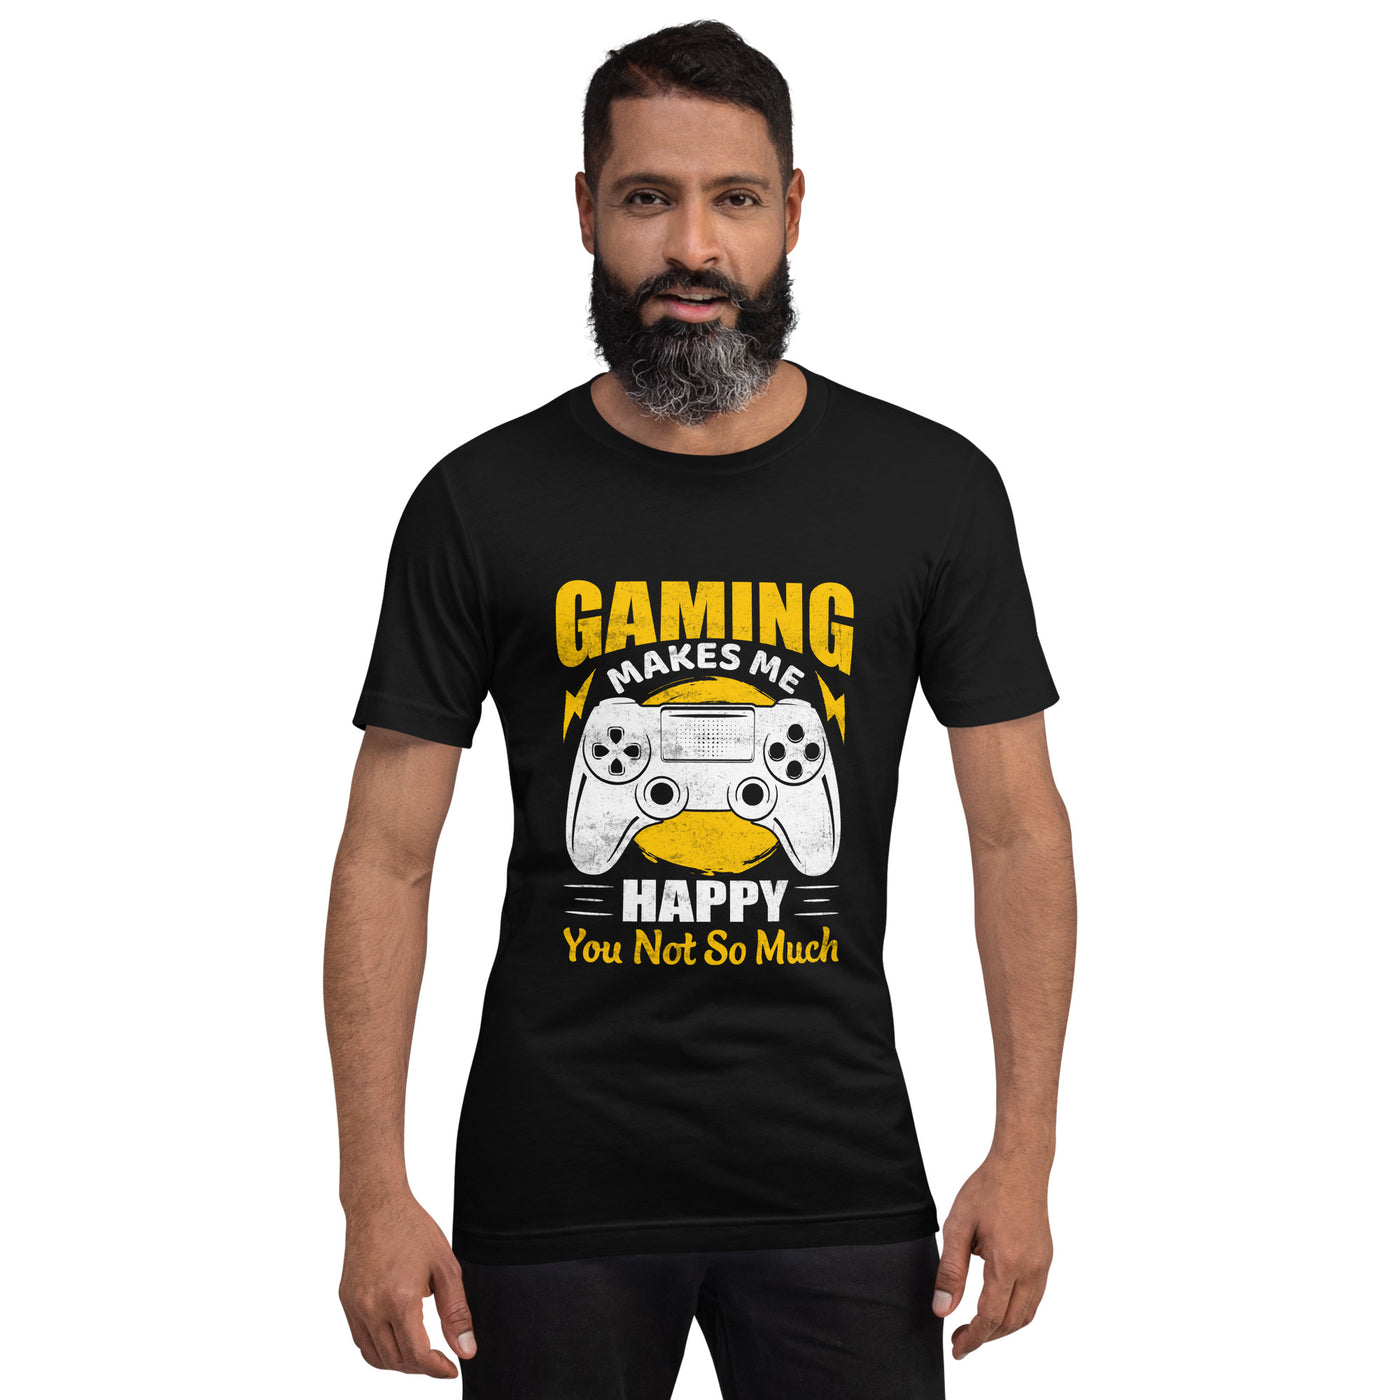 Gaming Makes me Happy (MAHFUZ) - Unisex t-shirt